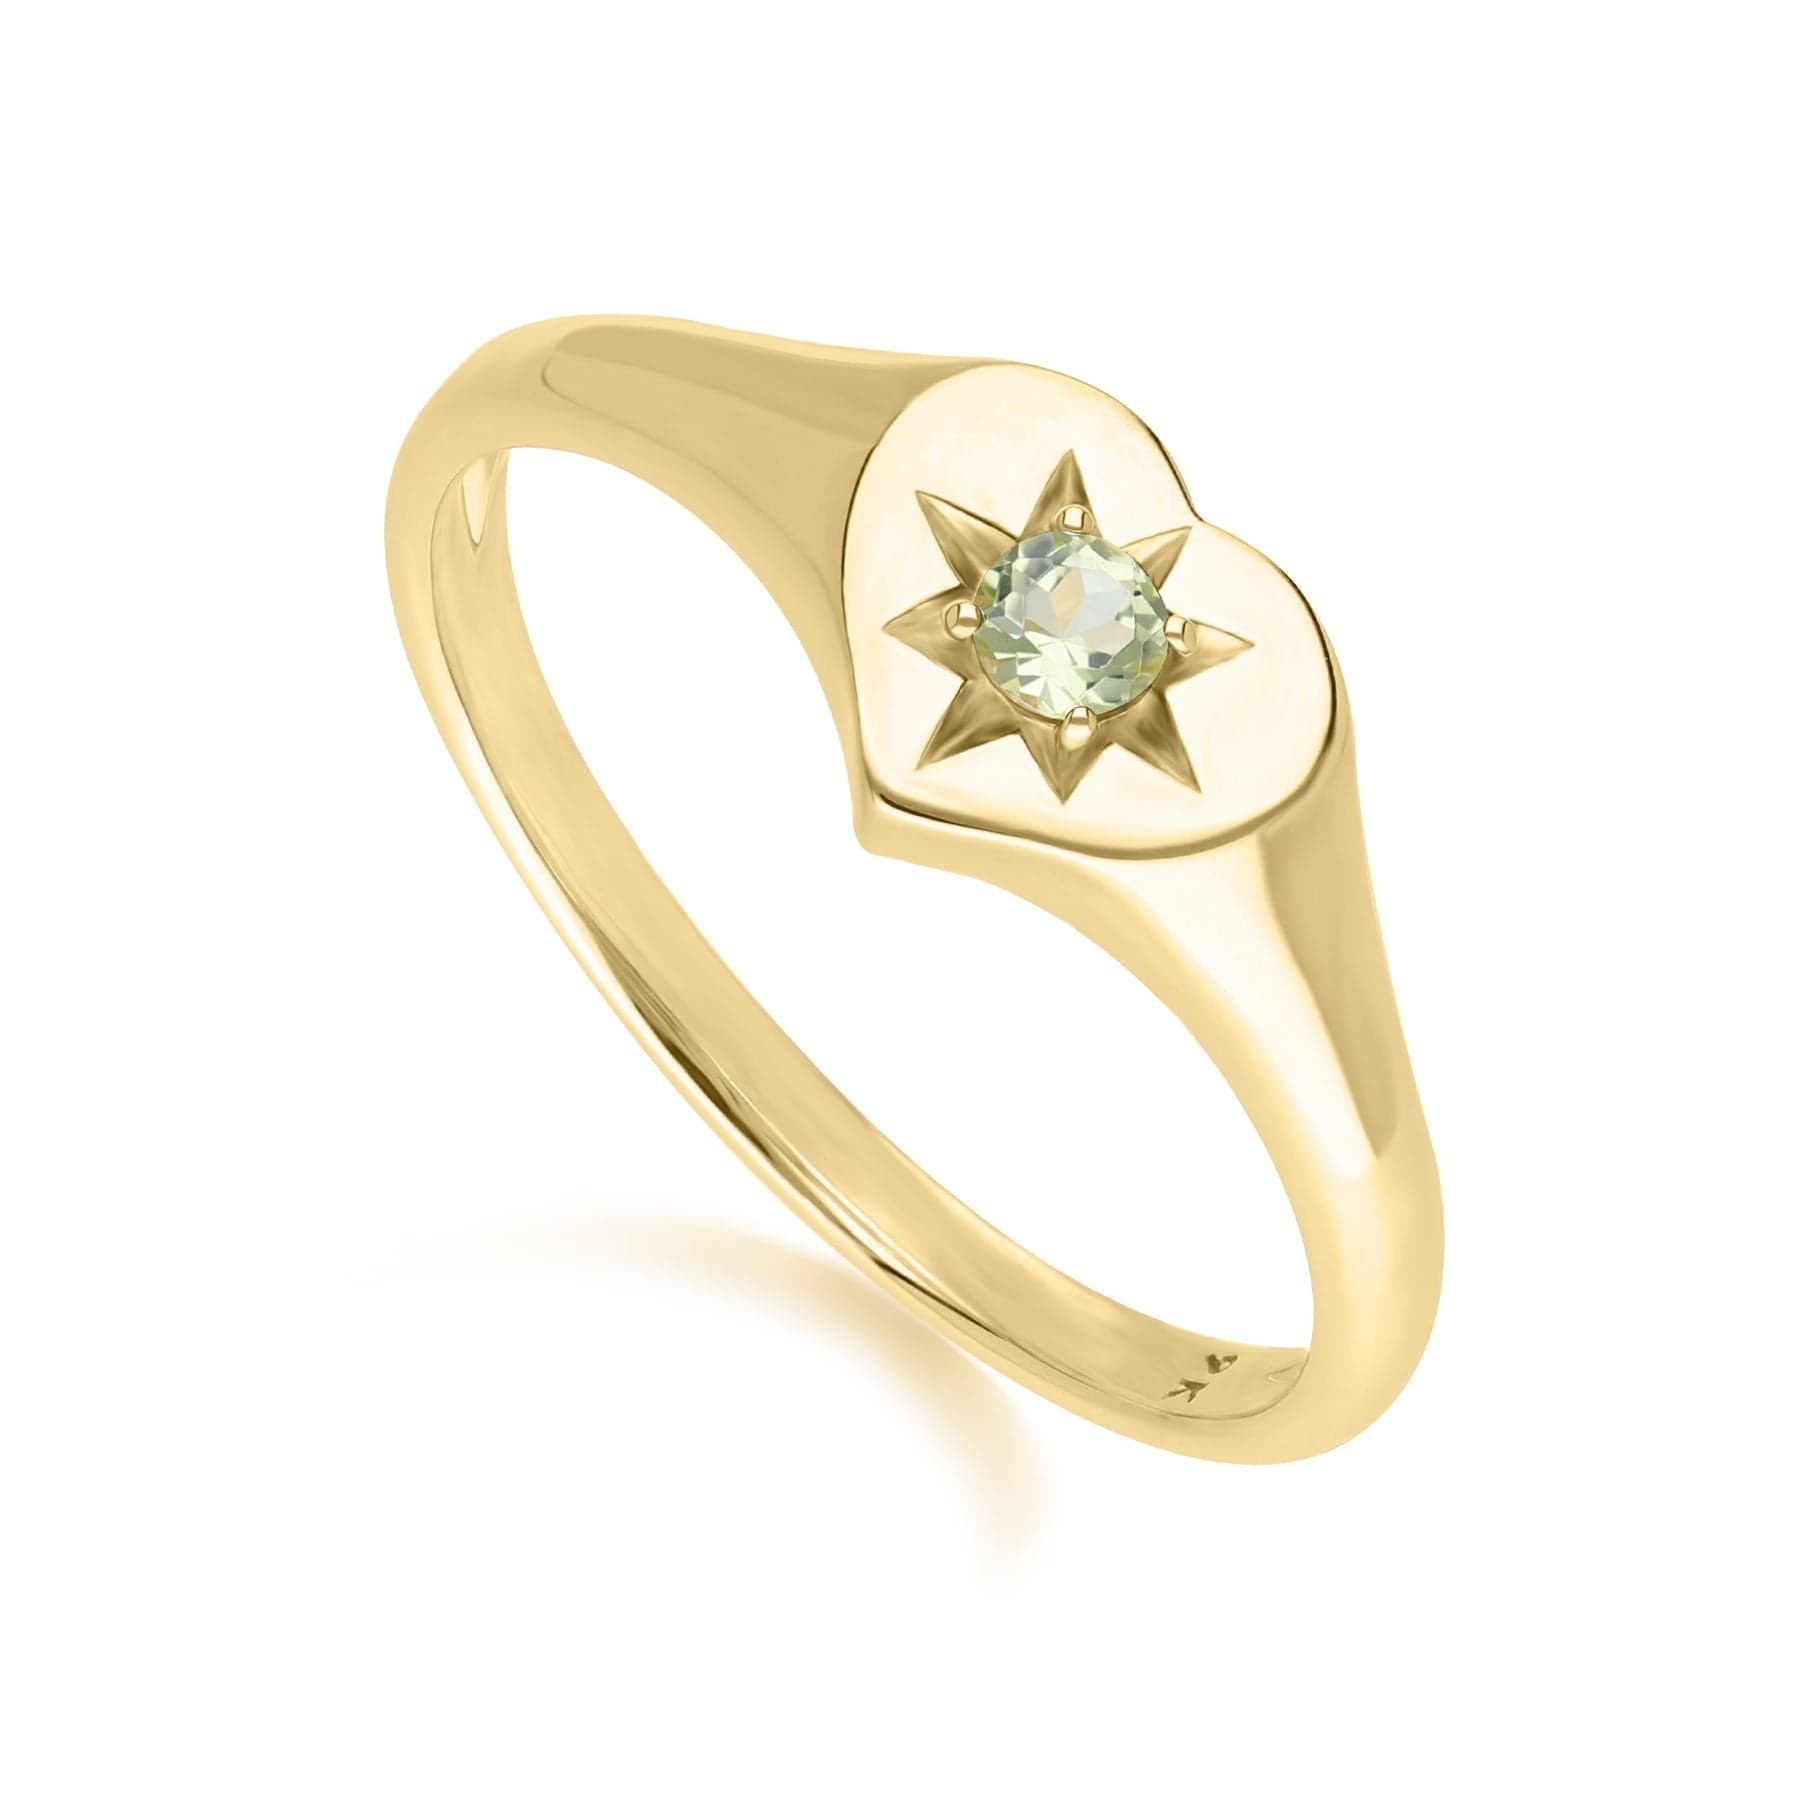 ECFEW™ 'The Liberator' Peridot Heart Ring in 9ct Yellow Gold - Gemondo